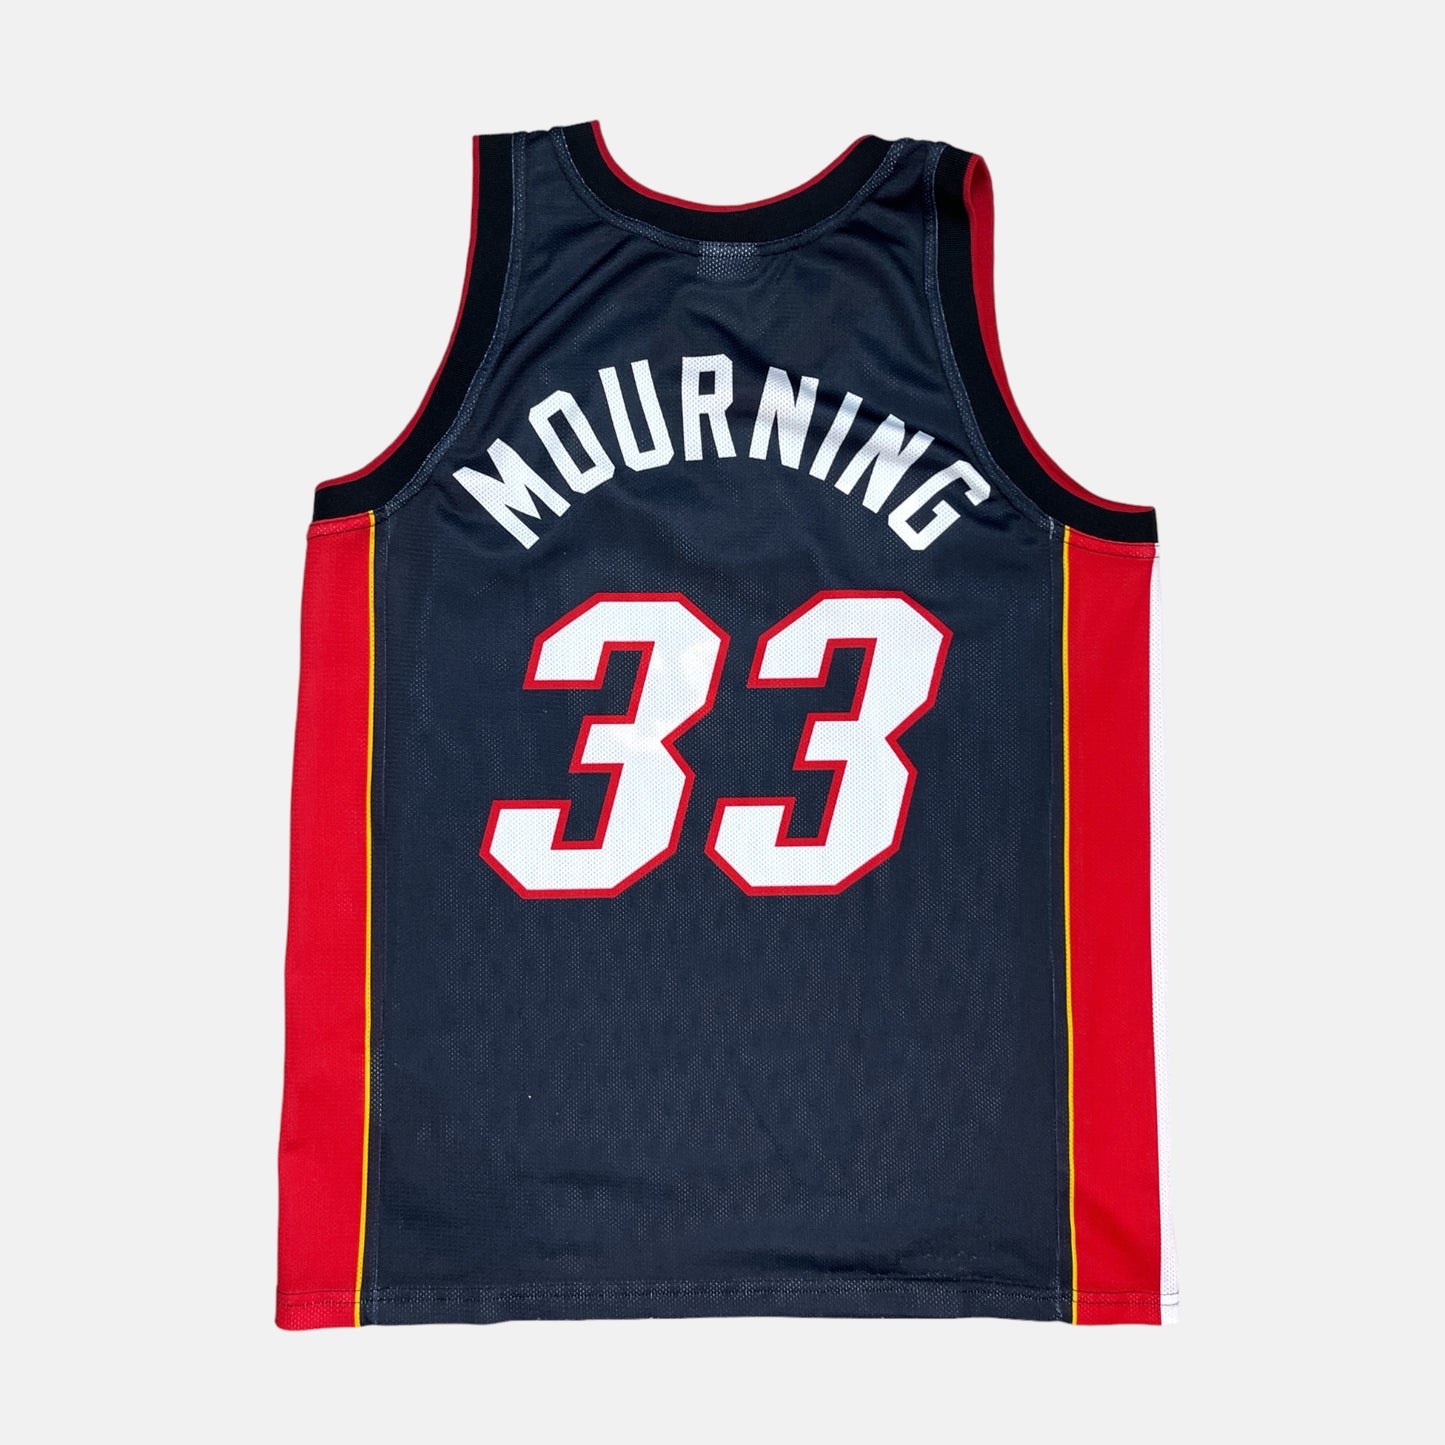 Miami Heat - Alonzo Mourning - Größe L - Champion - NBA Trikot